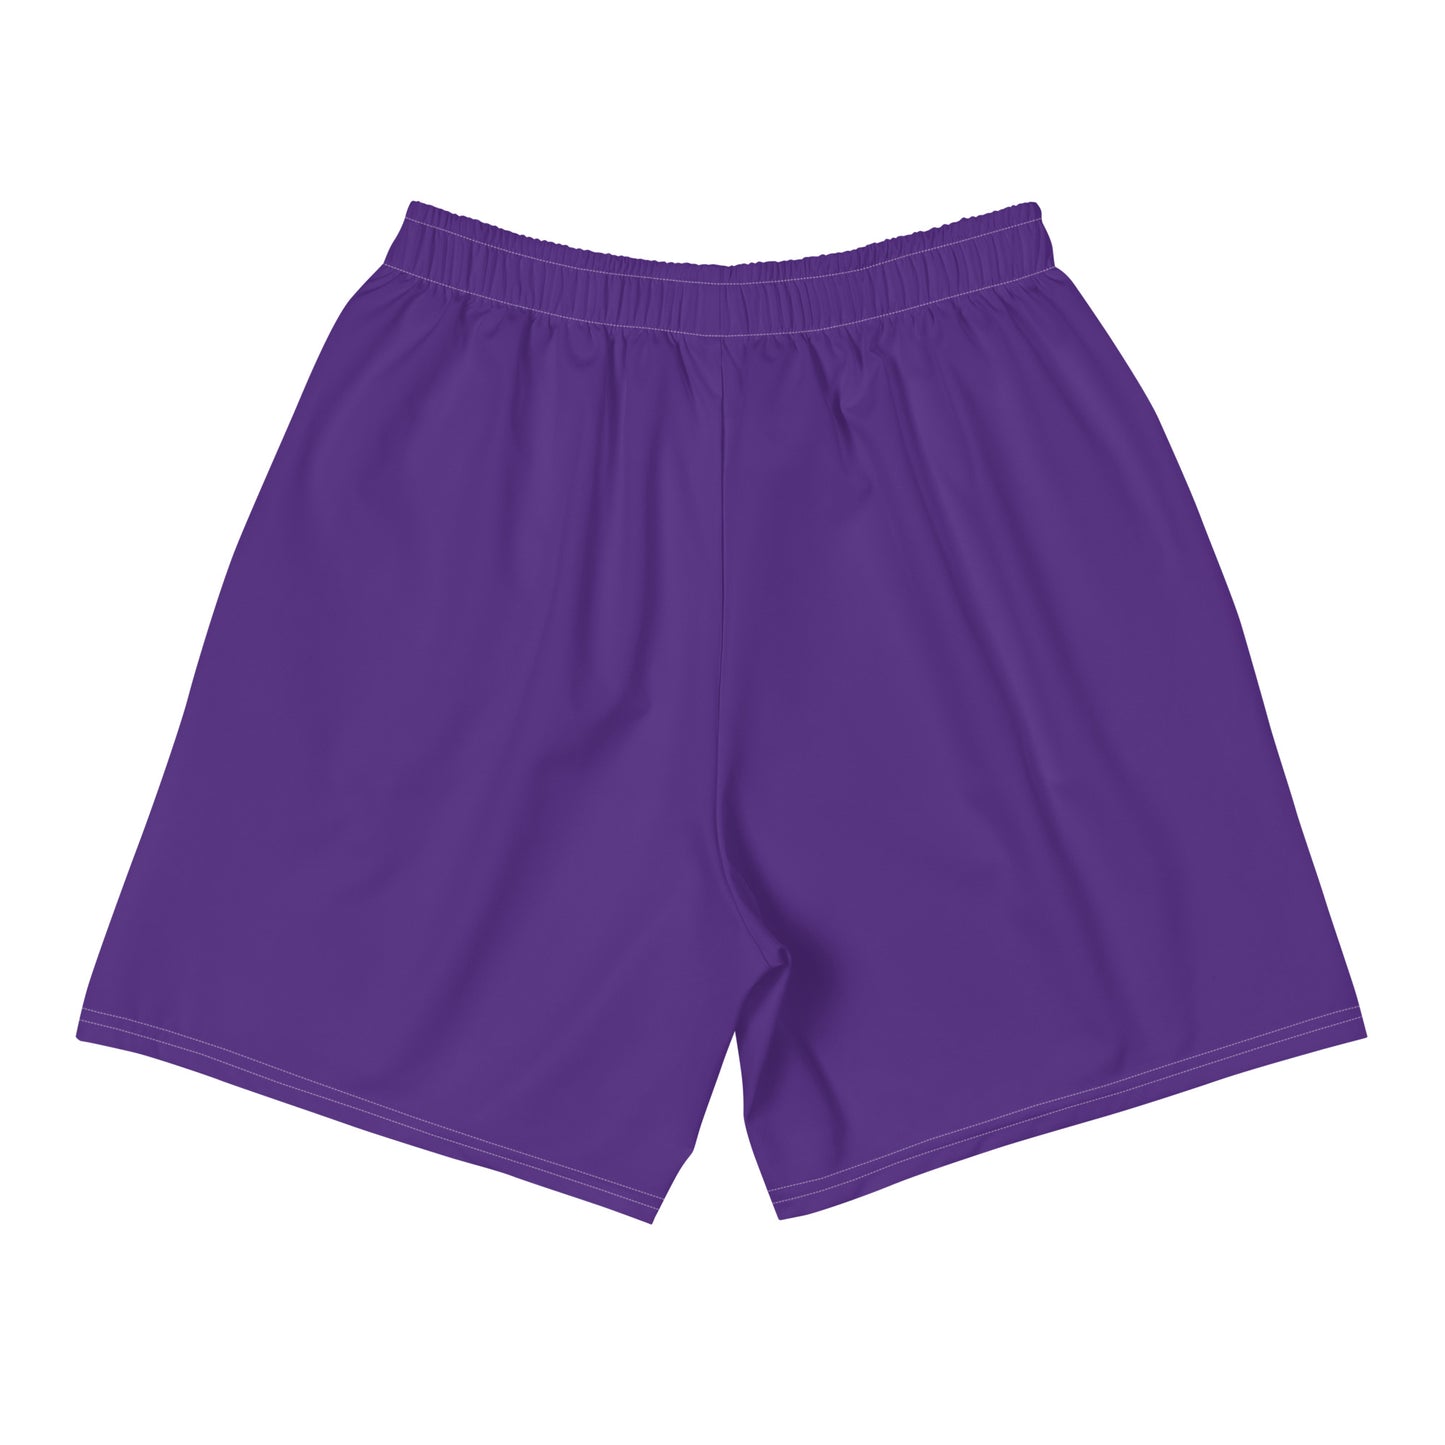 Purple SUFFER Mascot Athletic Shorts